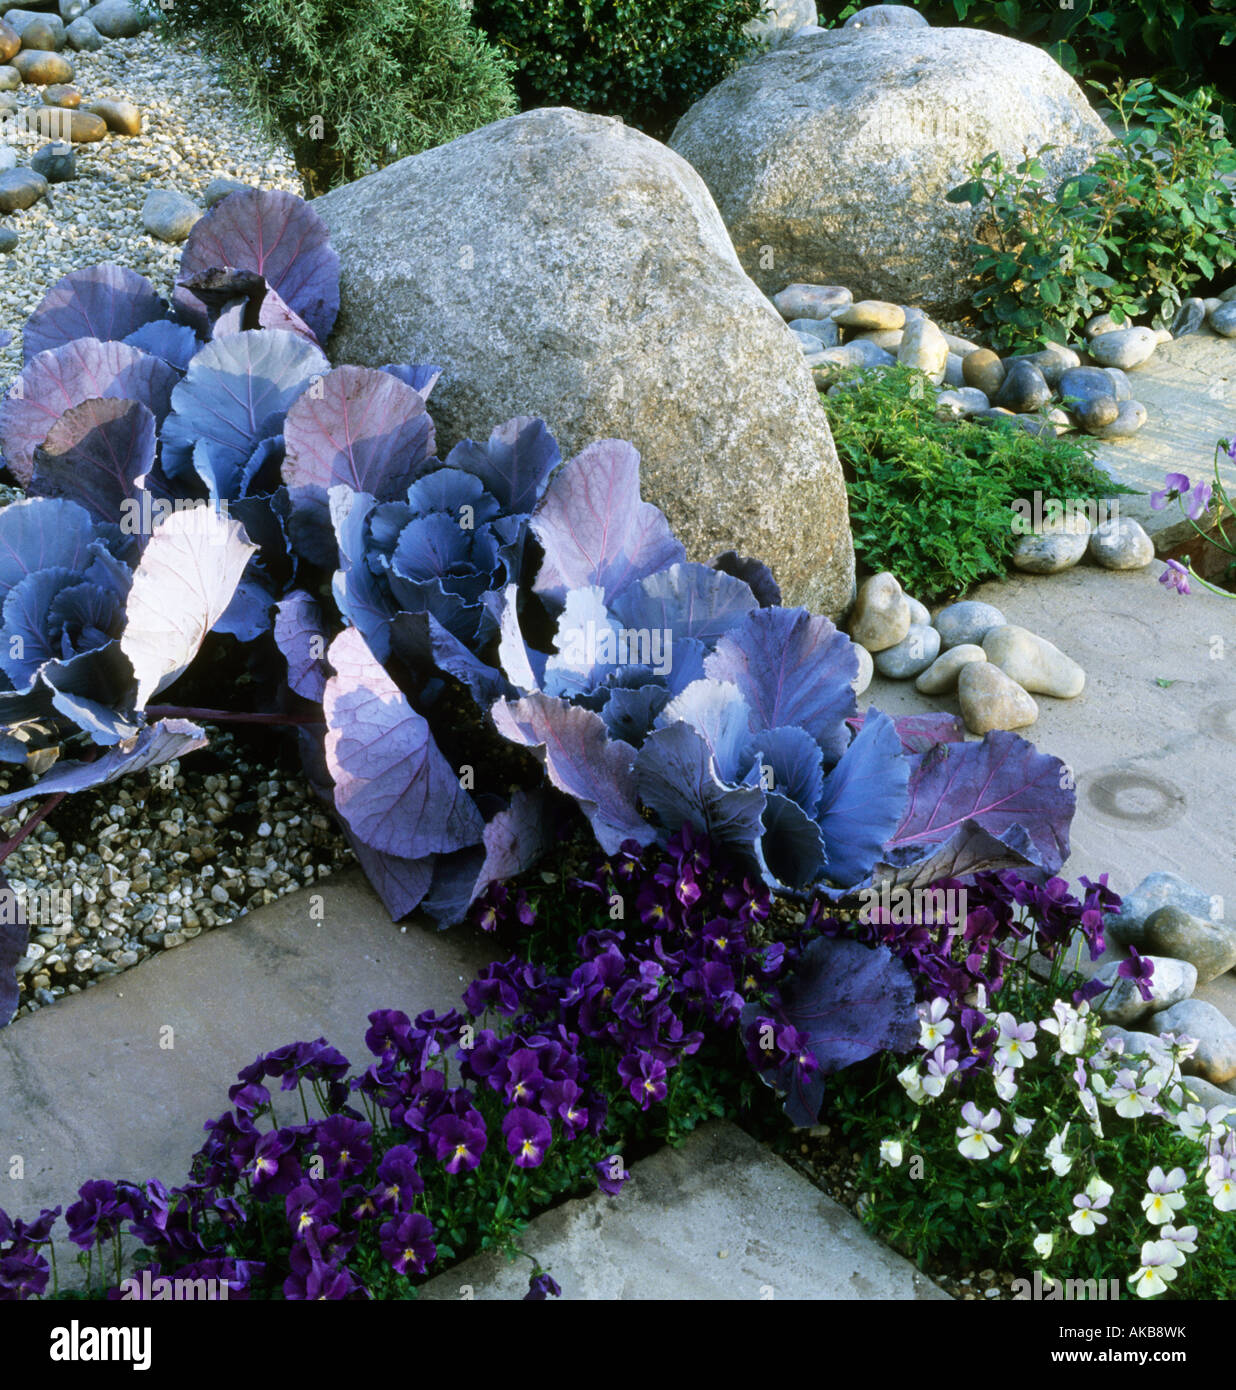 design Geoffrey Whiten Violas and cabbage growing in pavement cracks Stock Photo